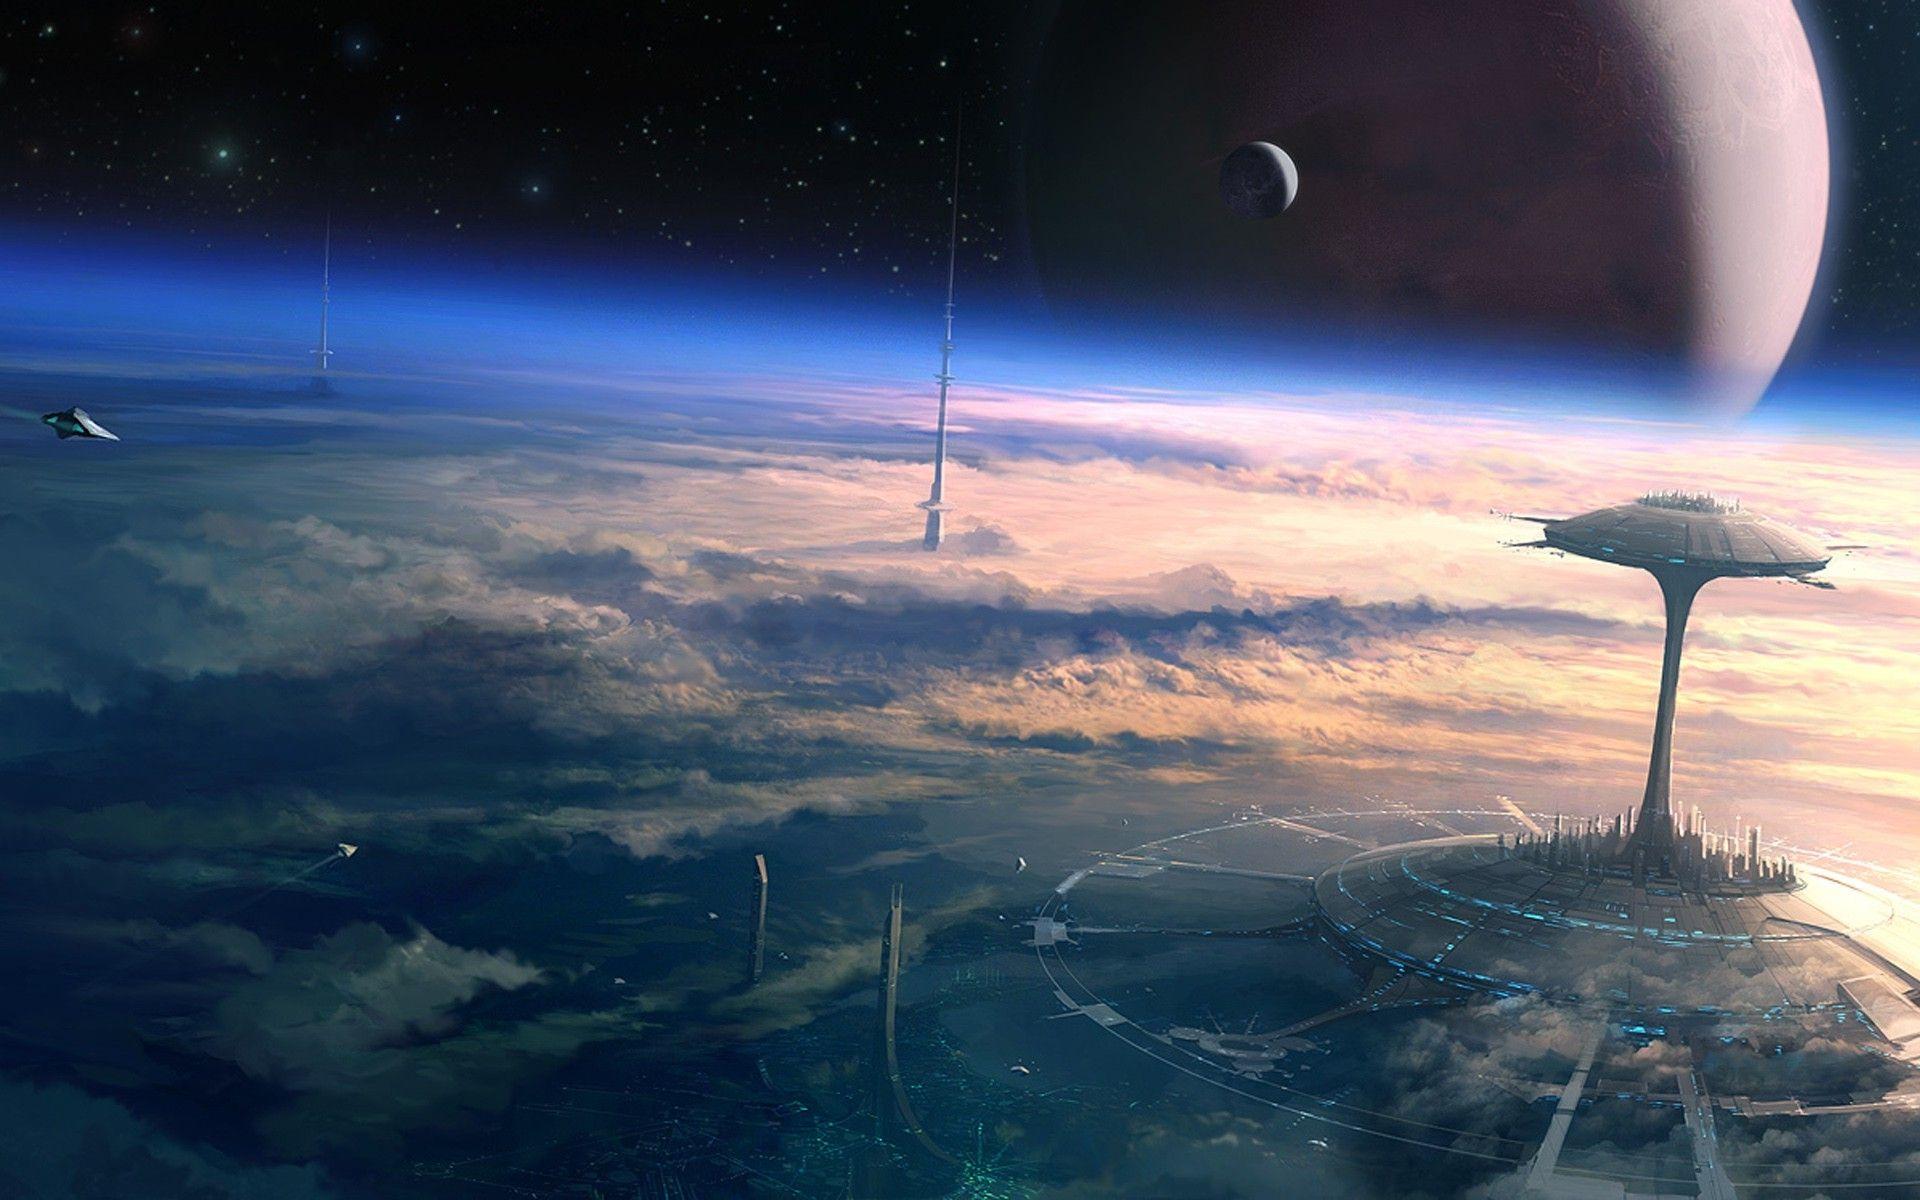 science Fiction, Digital Art, Space, Futuristic, Planet, Atmosphere